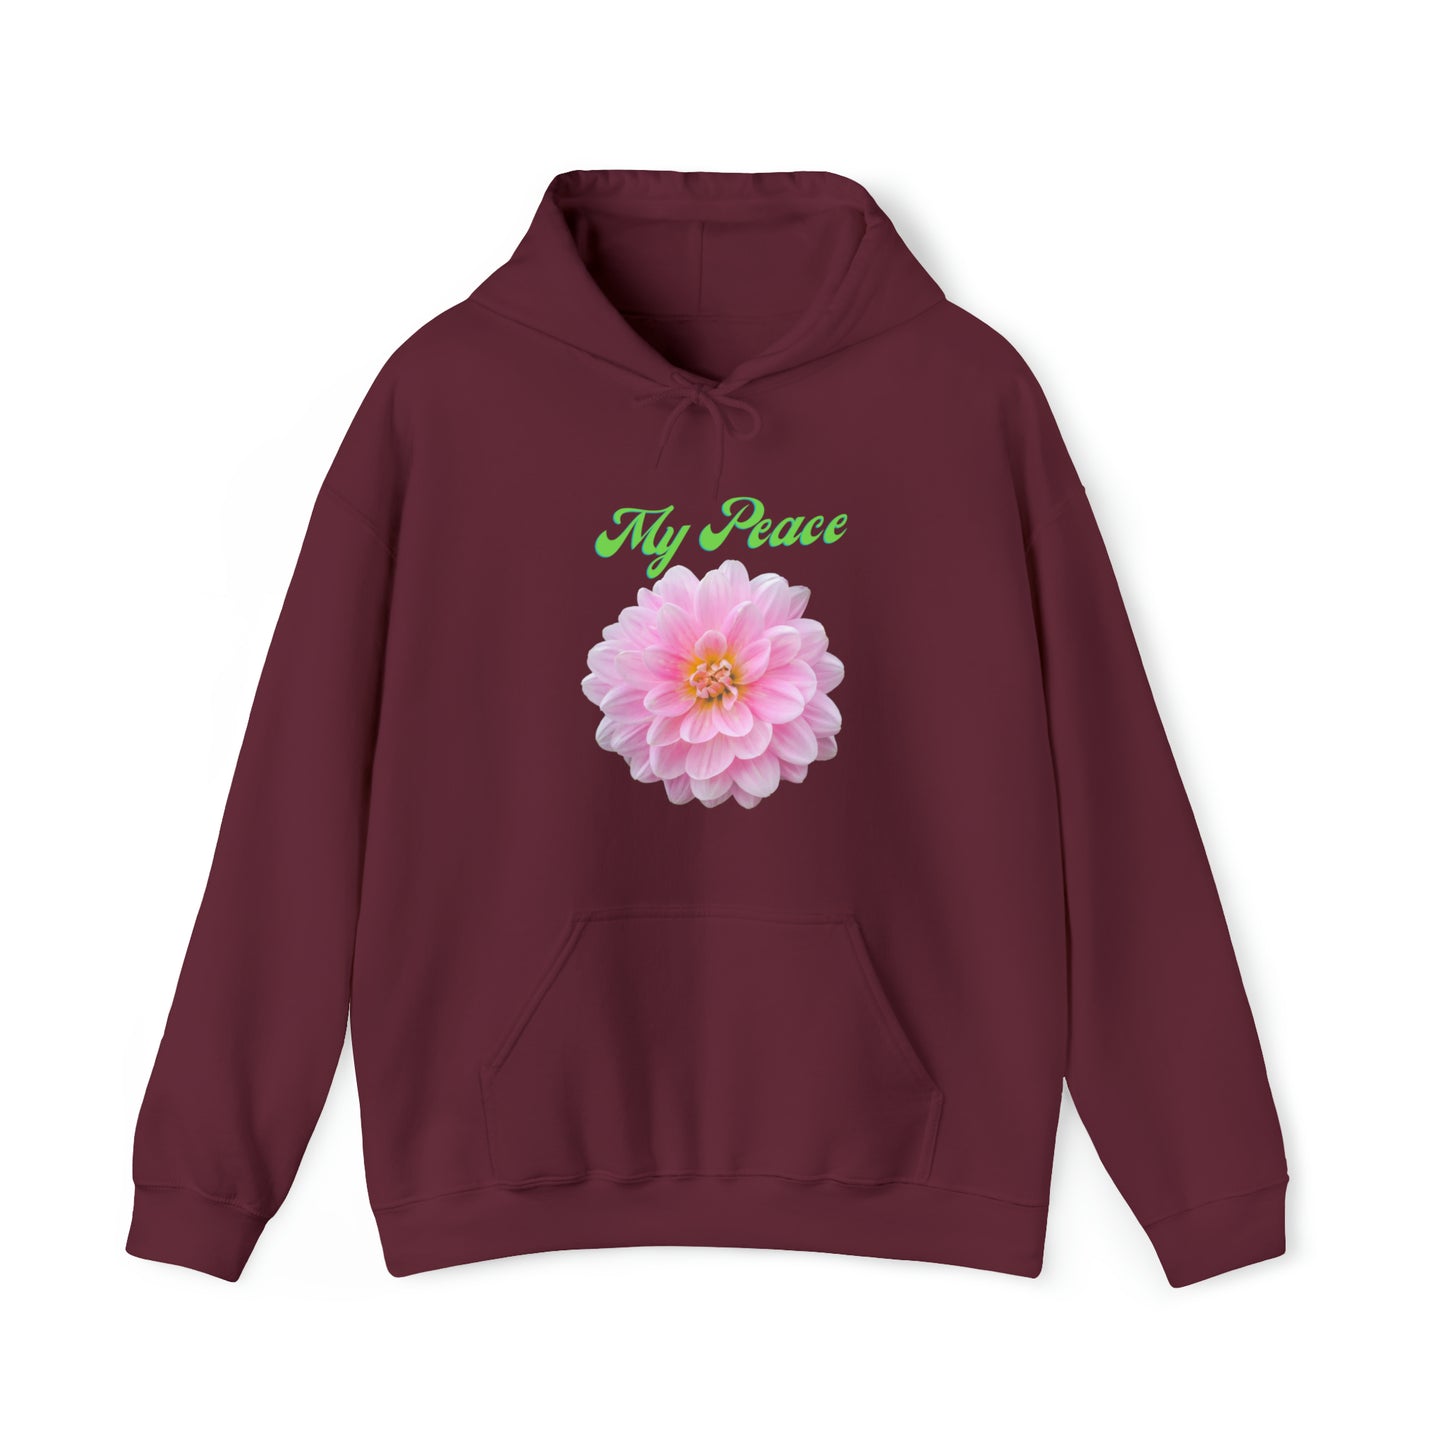 My Peace pink peony unisex hoodie gift